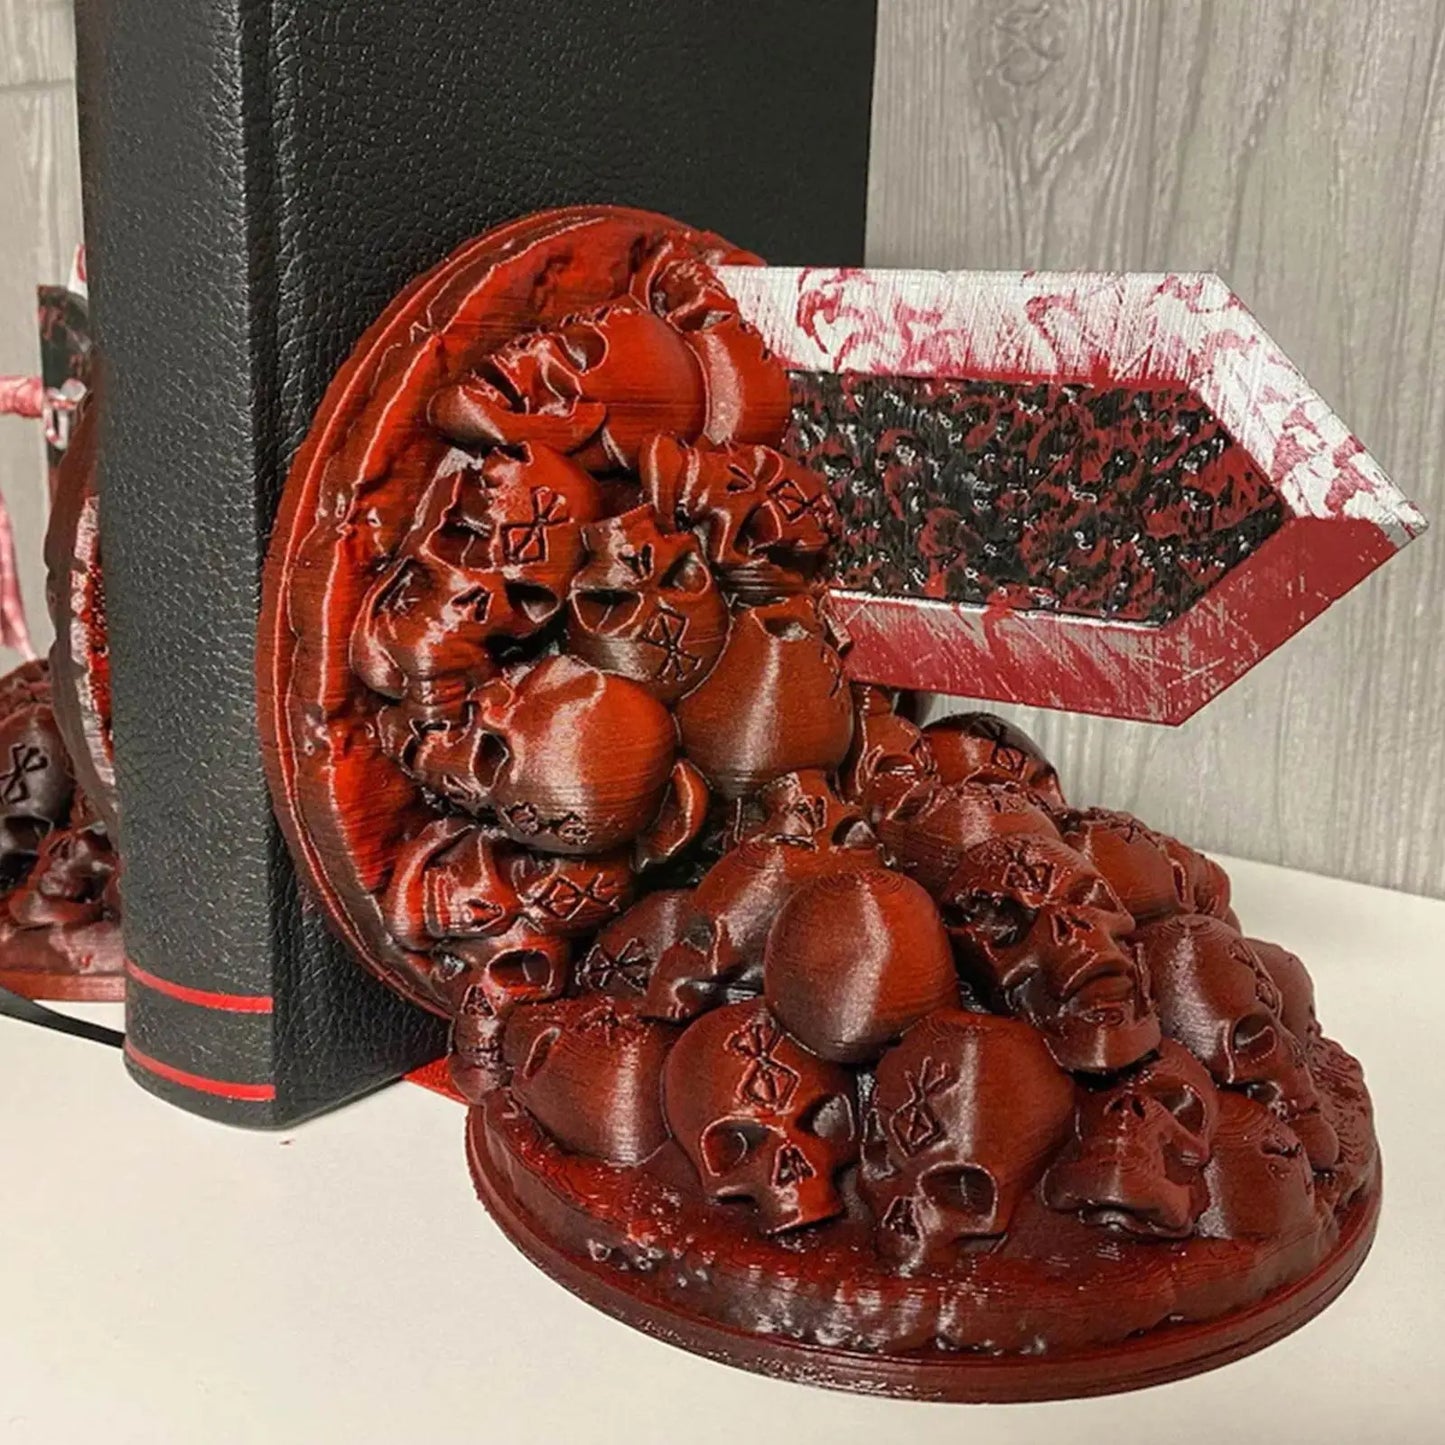 Berserk Bookends Furious Bookends Dragon Slayer Resin Craft Study Artwork Decora Decorative Ornament Home Desktop Bookshelf T4z7